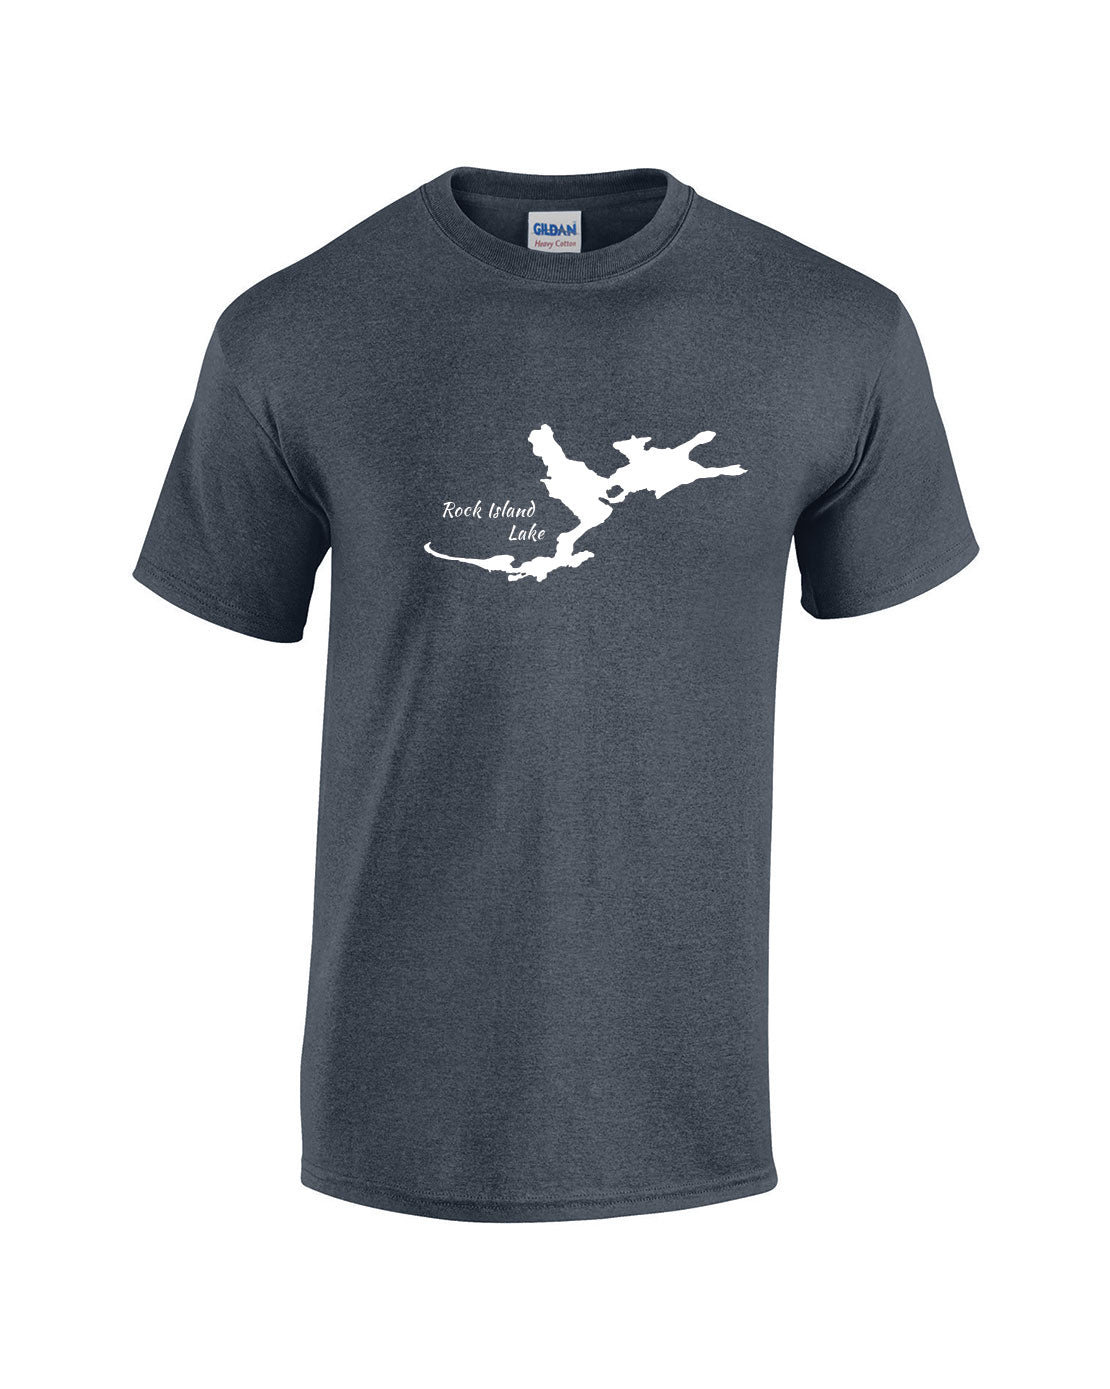 Rock Island Lake T-Shirt